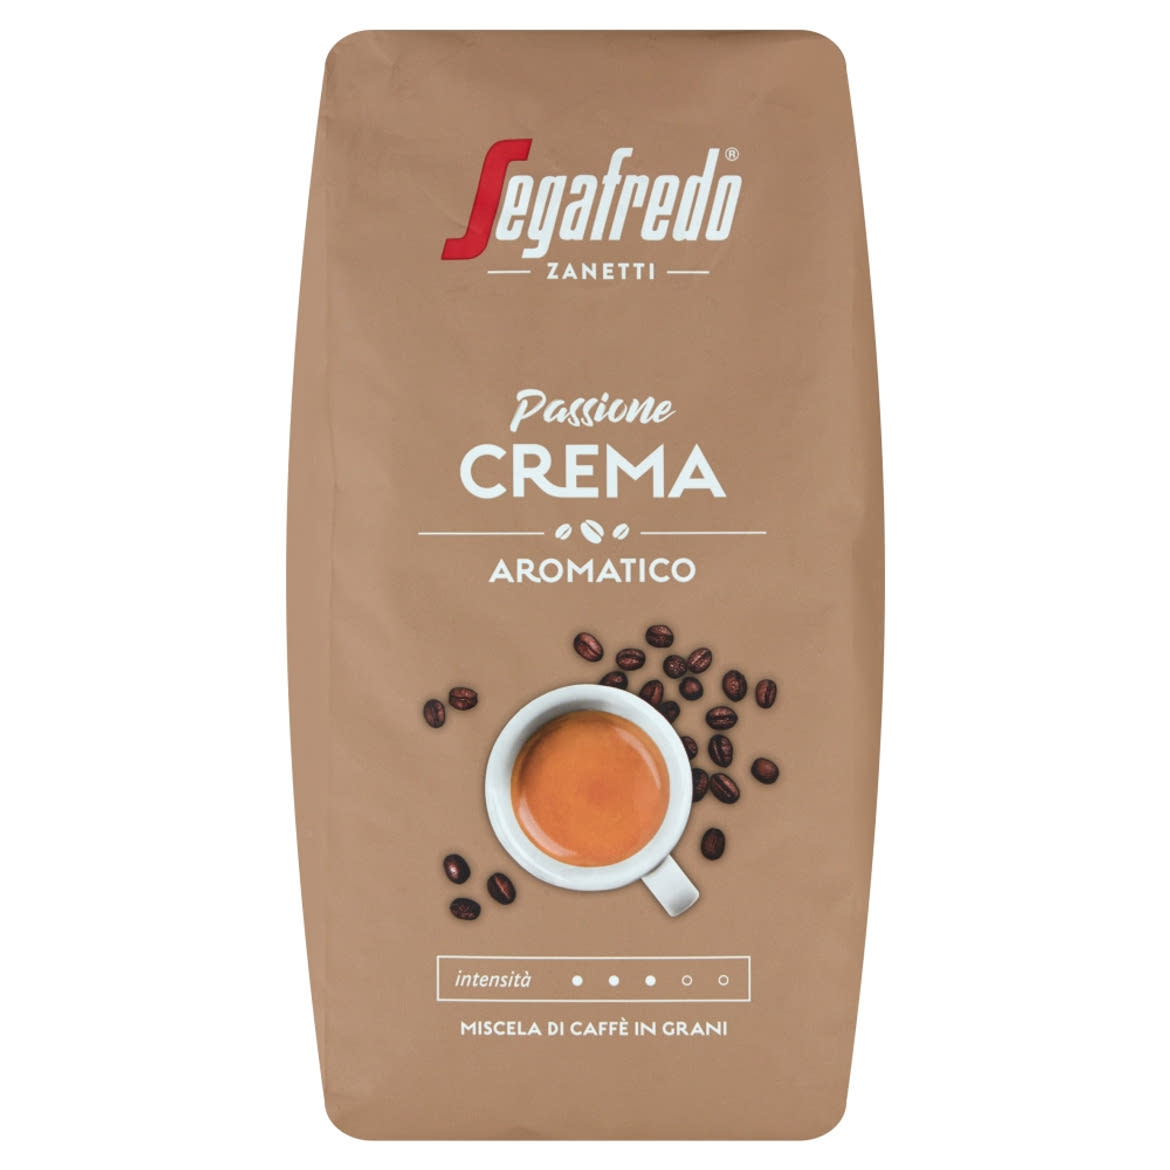 Segafredo Zanetti Passione Crema Aromatico szemes pörkölt kávé